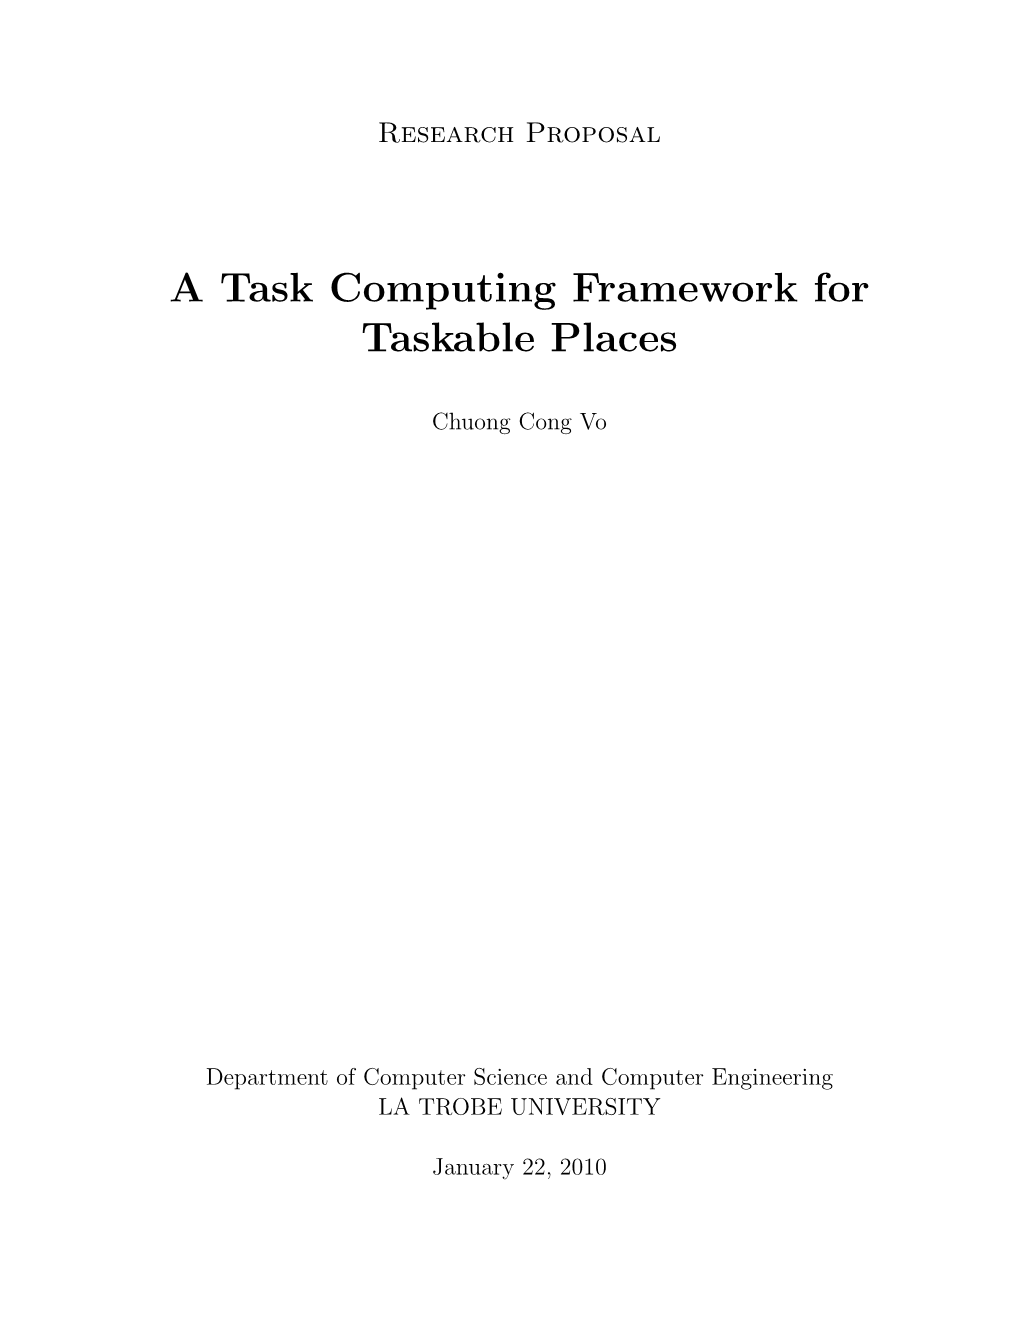 A Task Computing Framework for Taskable Places